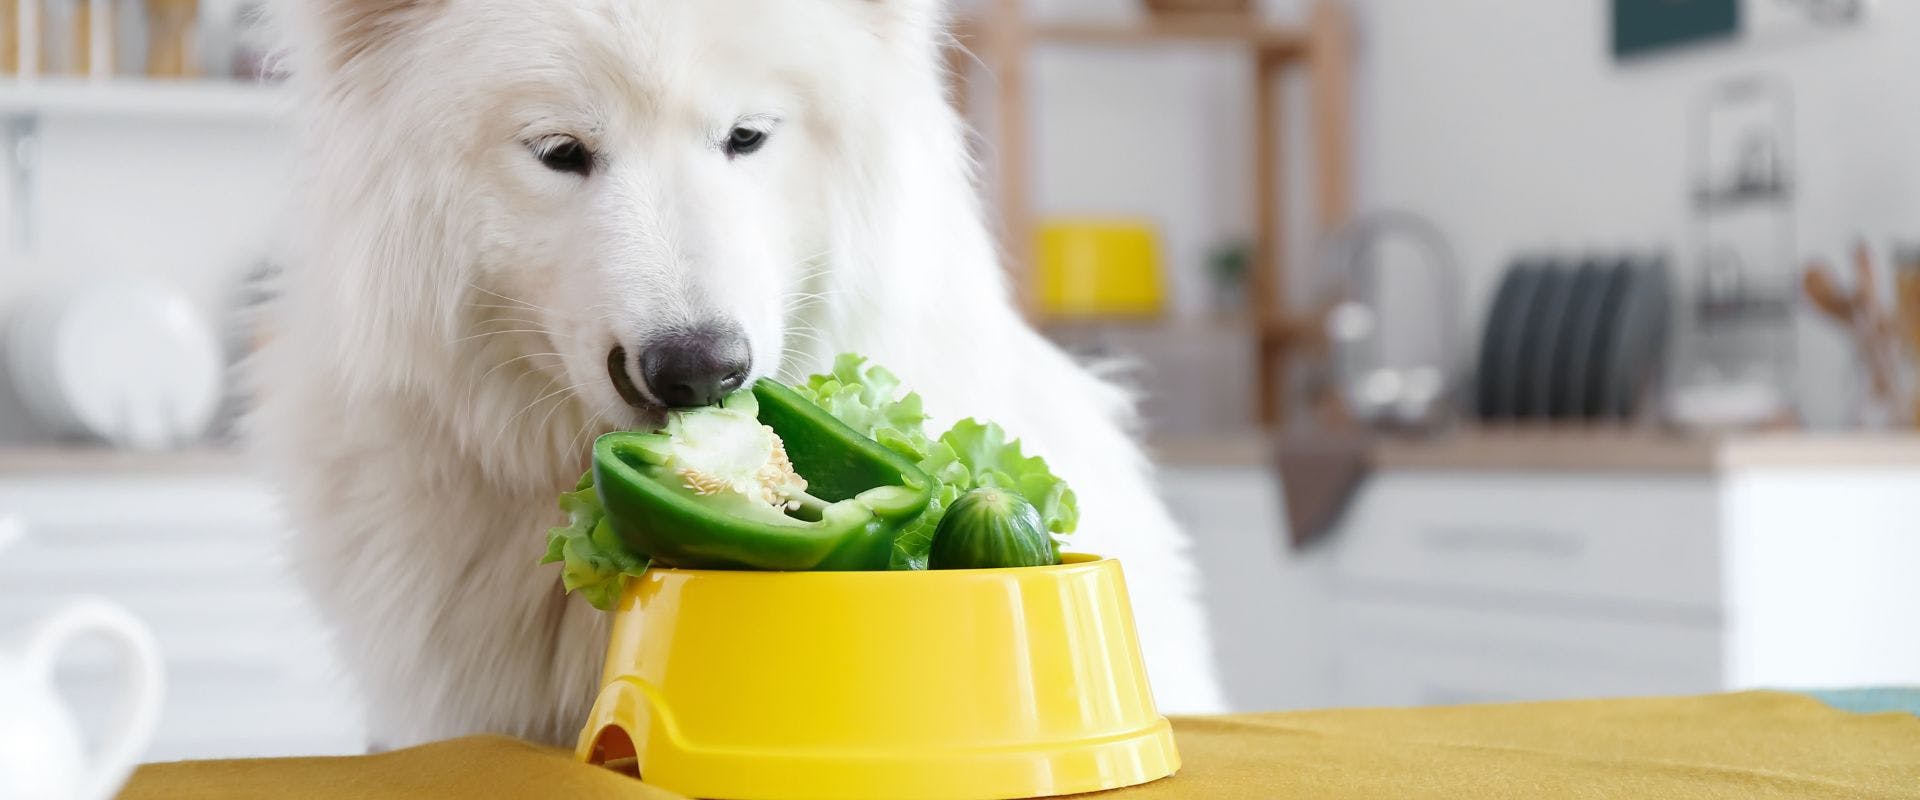 White fluffy dog eating salad